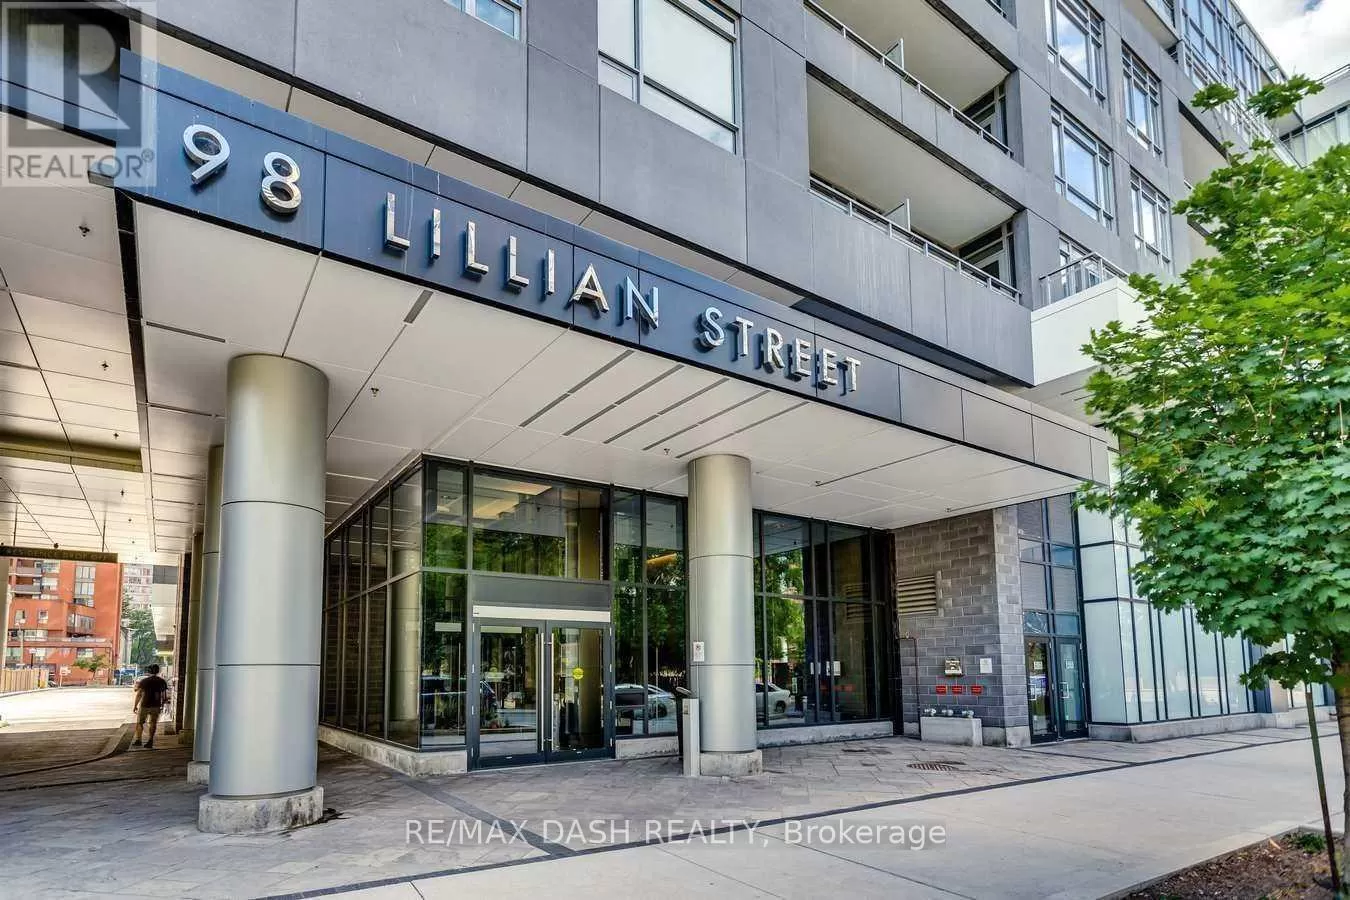 Apartment for rent: 616 - 98 Lillian Street, Toronto, Ontario M4S 0A5